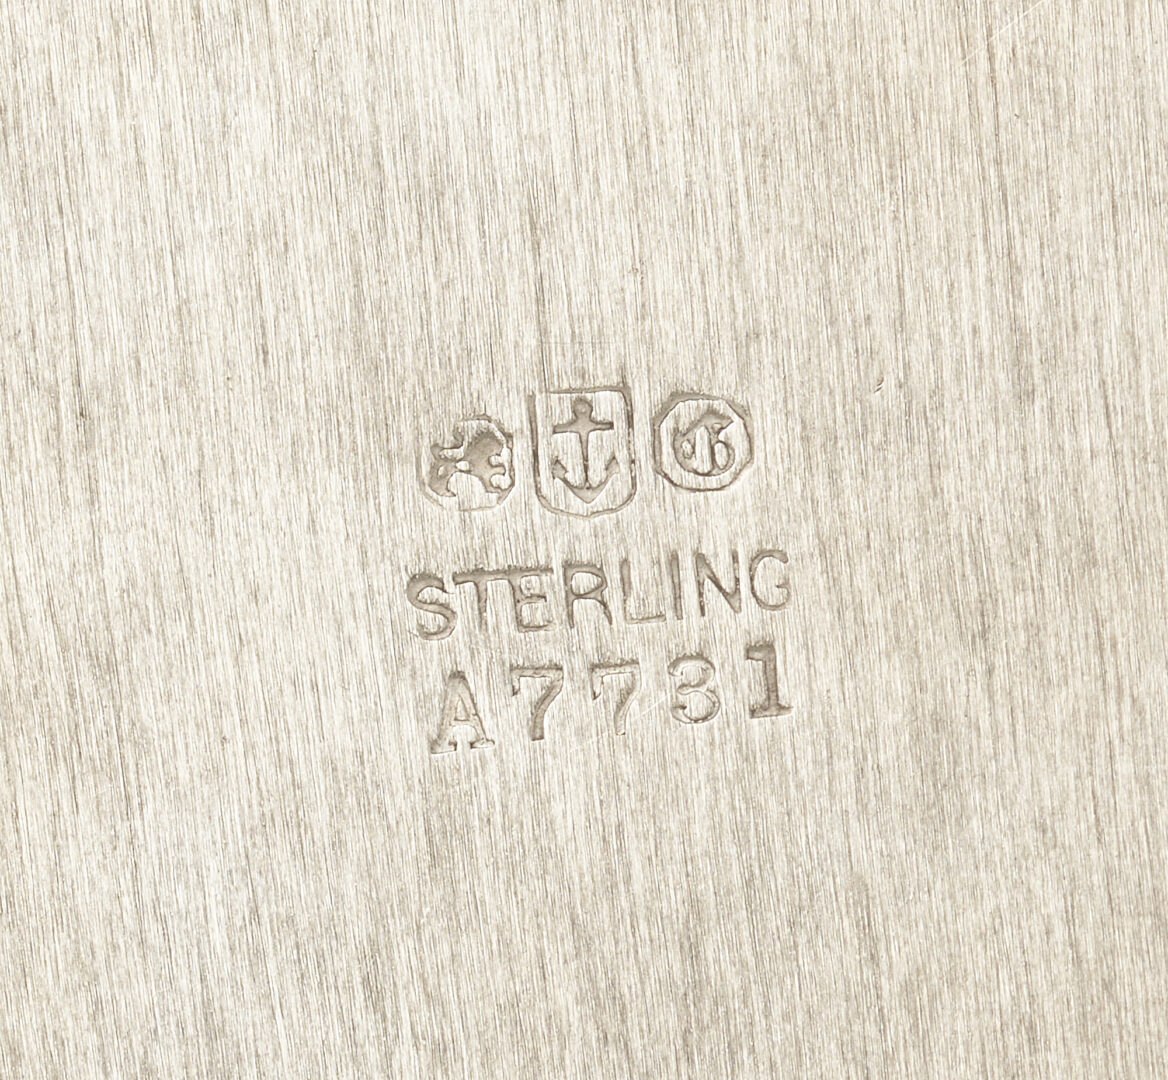 Lot 671: 14 Assembled Sterling Bread Plates, incl. Gorham  King Albert Pattern